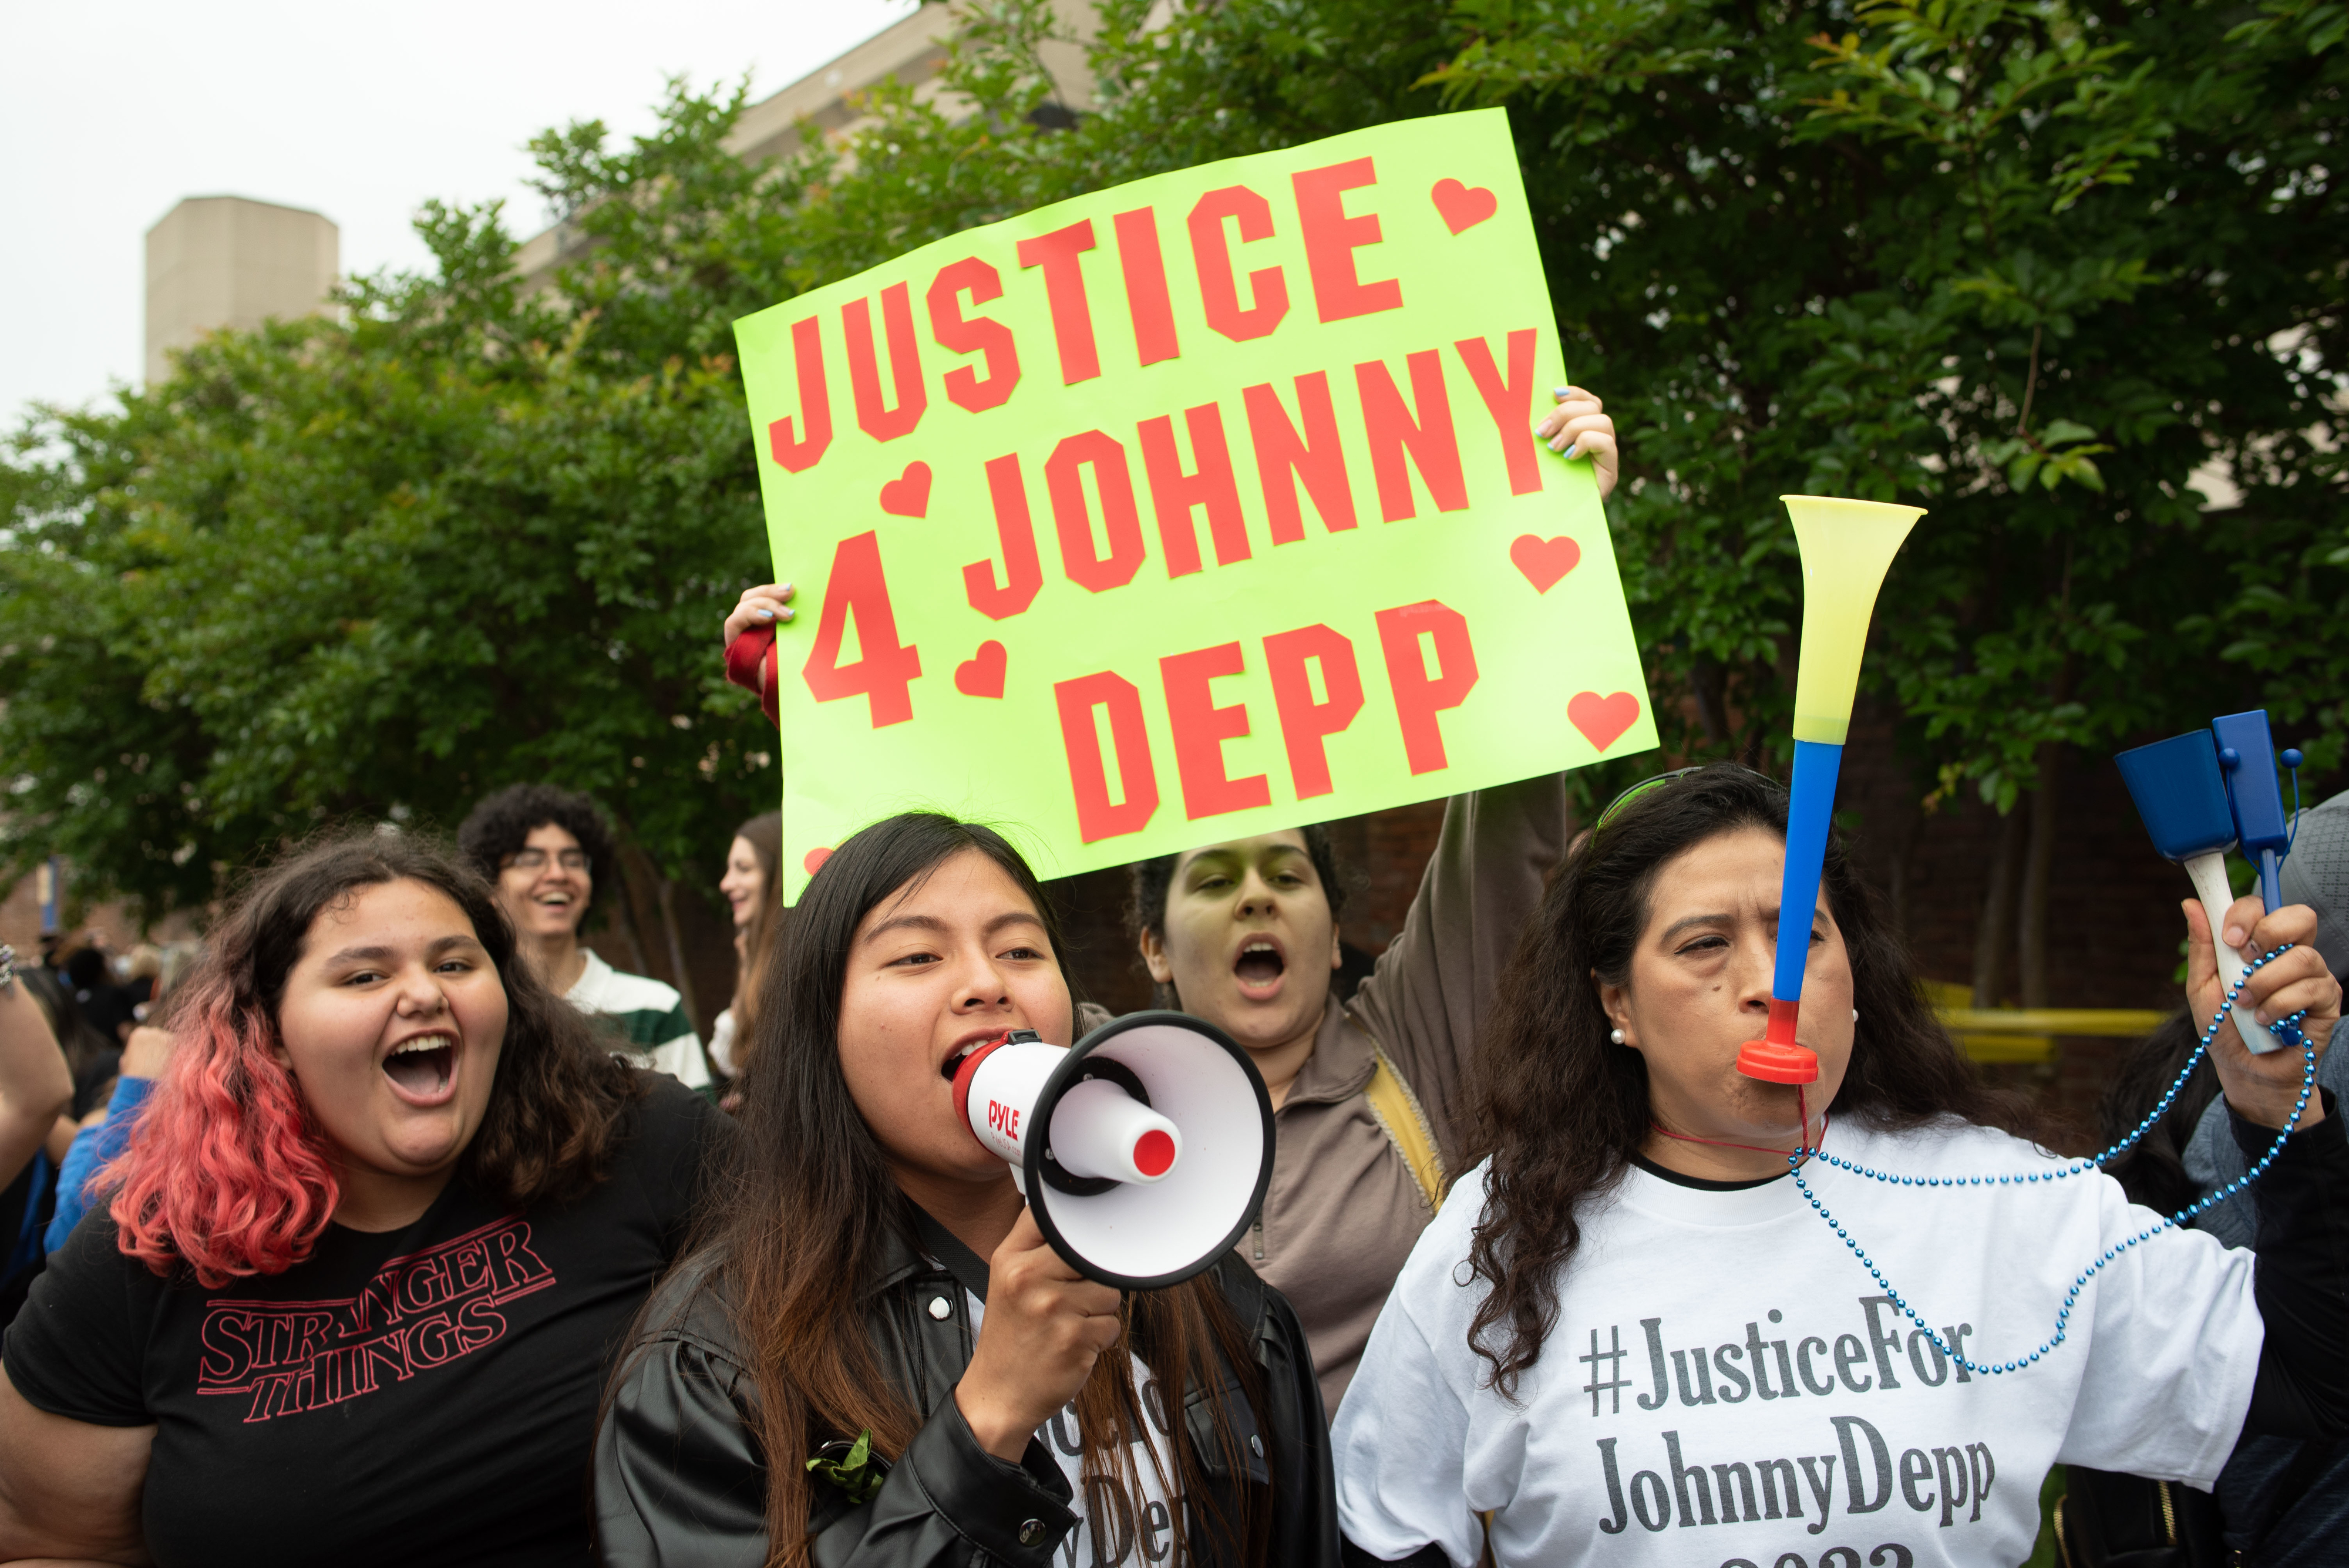 Fans of Johnny Depp protesting